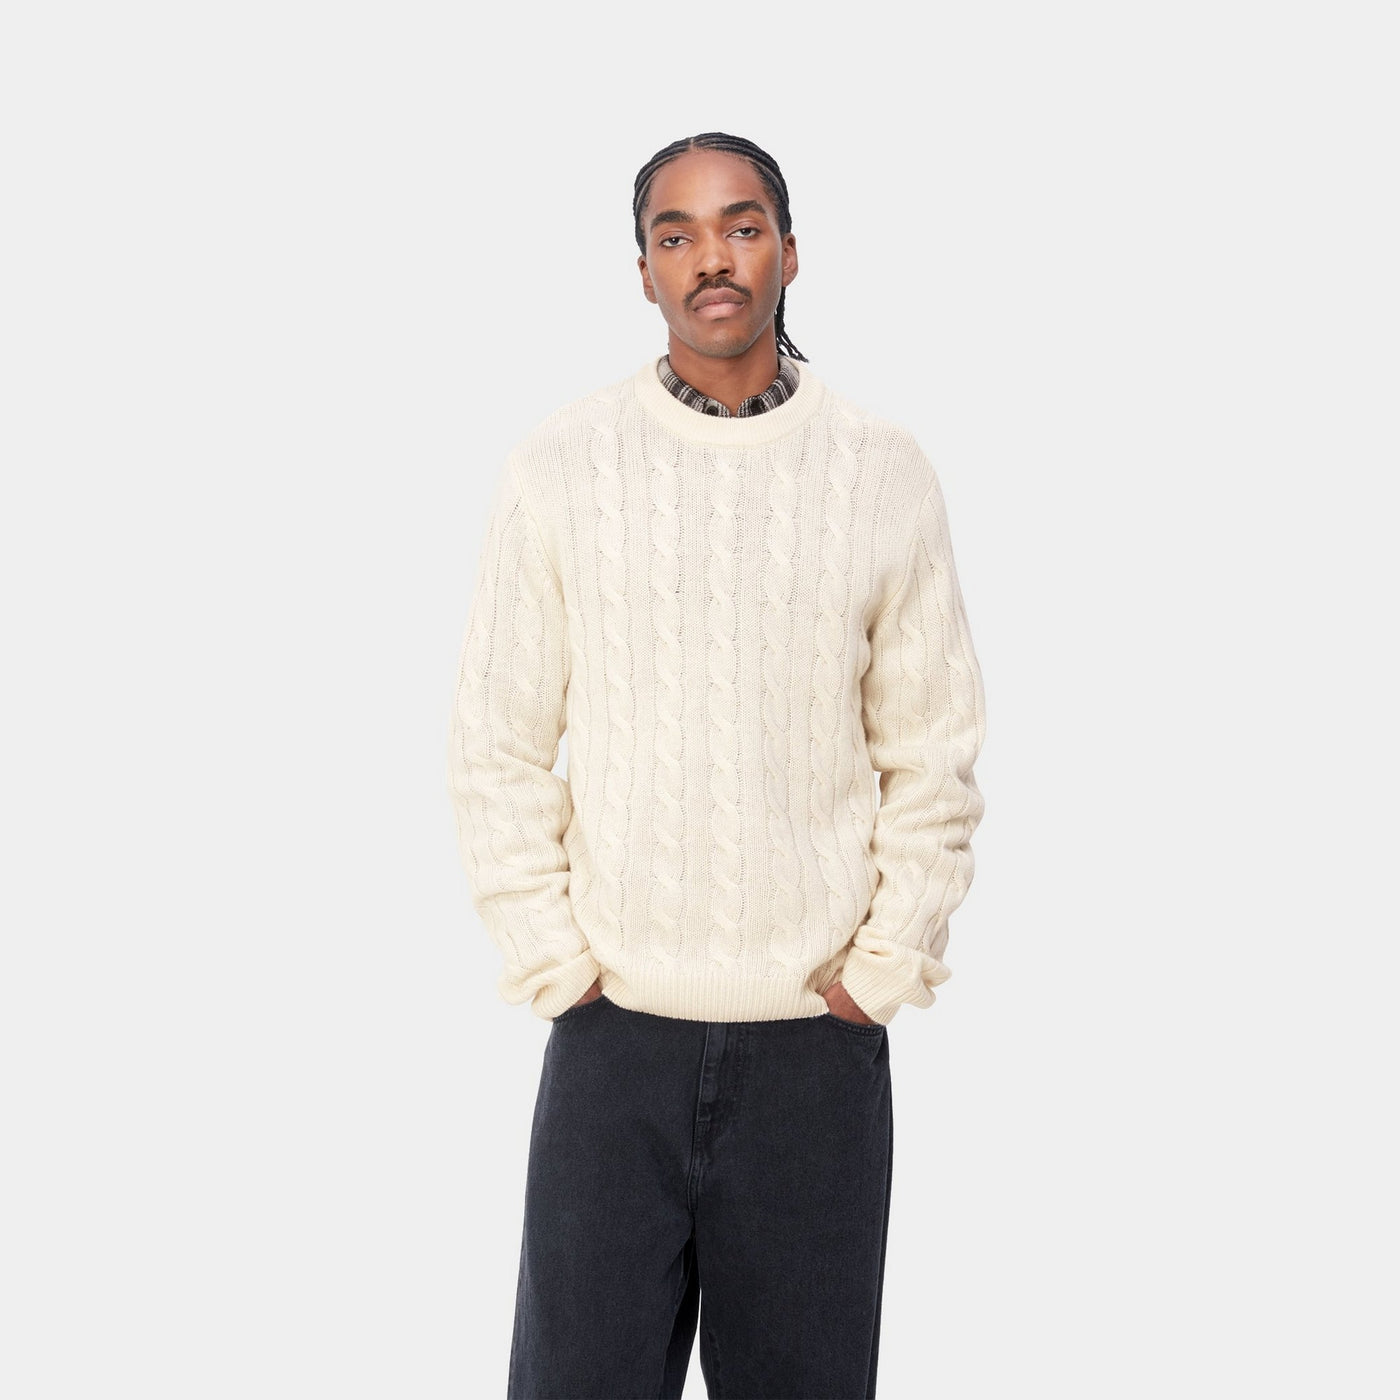 Cambell Sweater Salt I032304